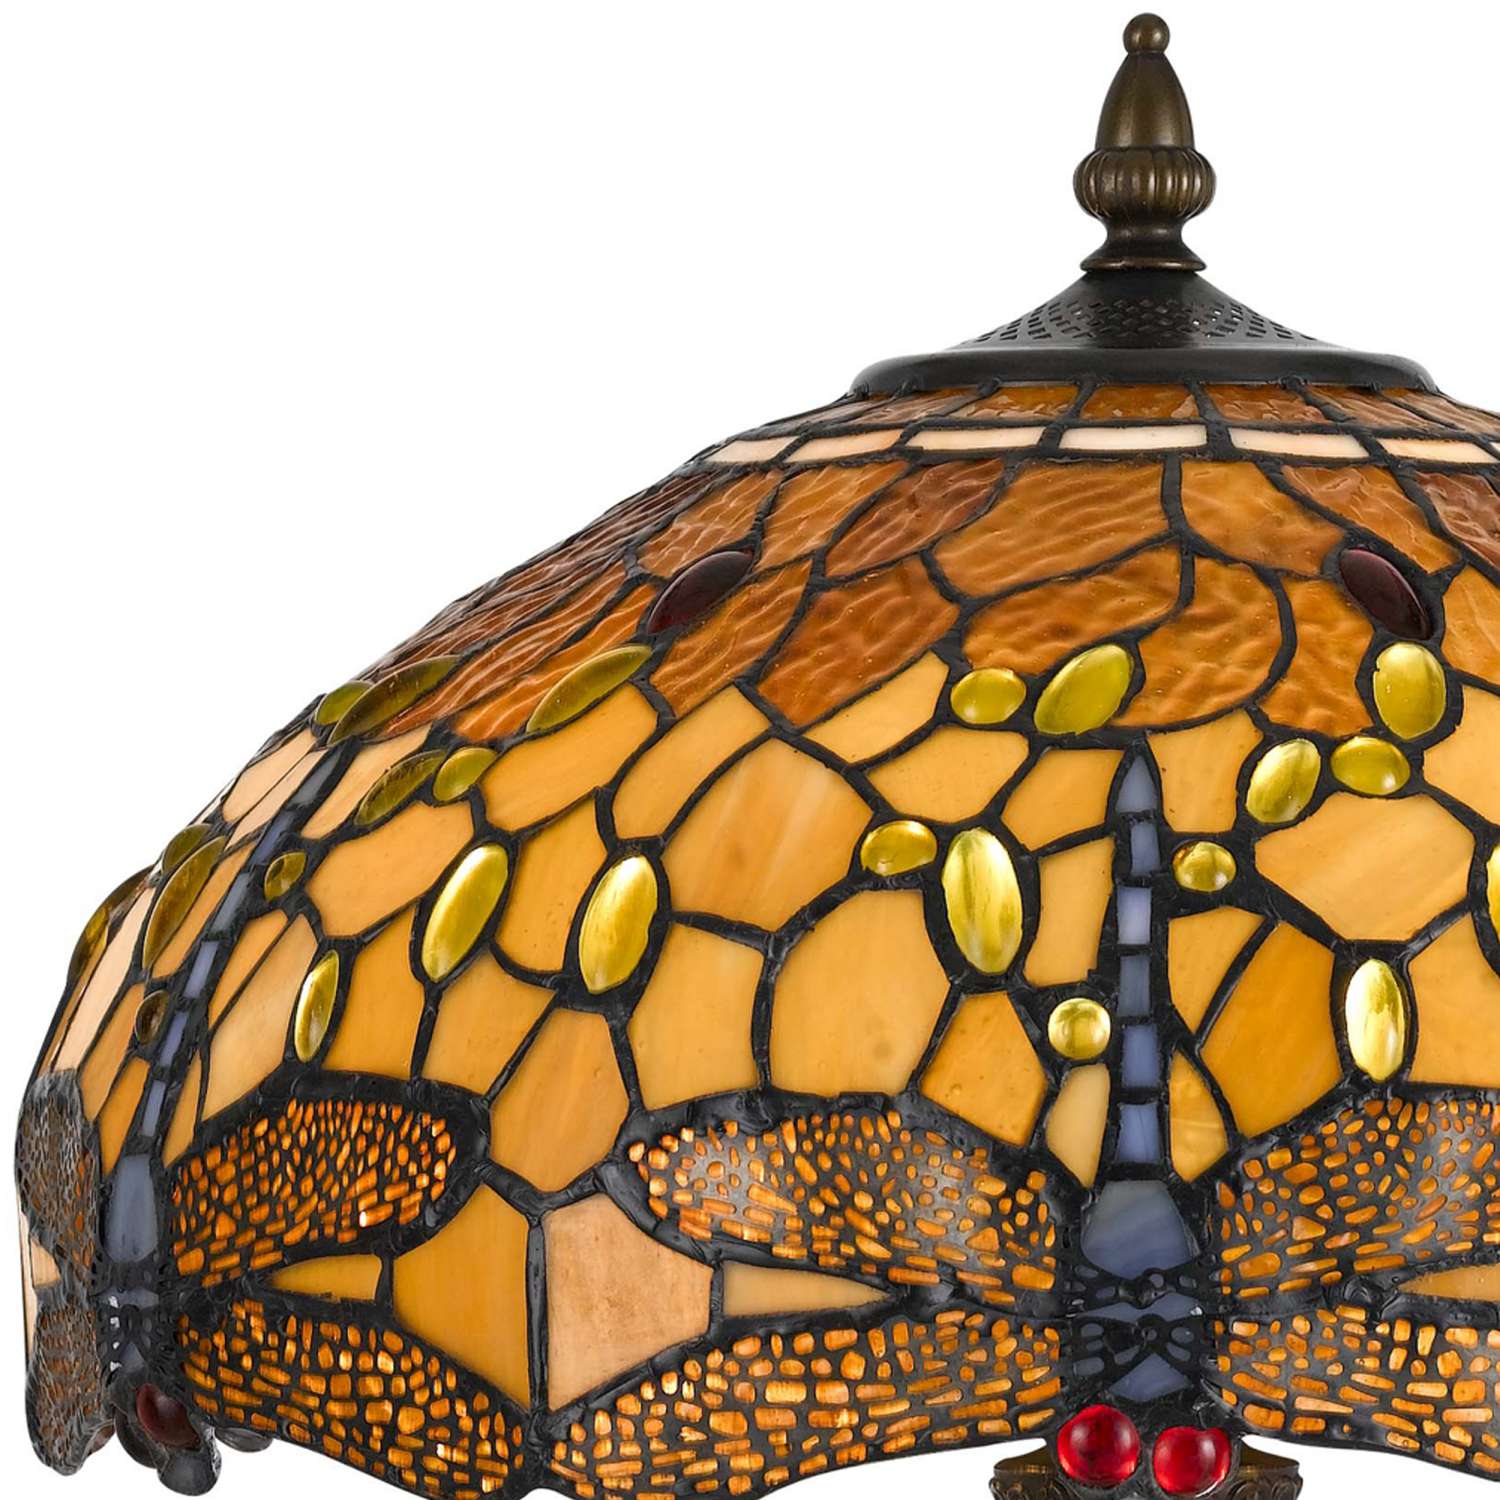 Benzara 2 Bulb Tiffany Table Lamp With Dragonfly Design Shade, Multicolor By Benzara Table Lamps BM223636